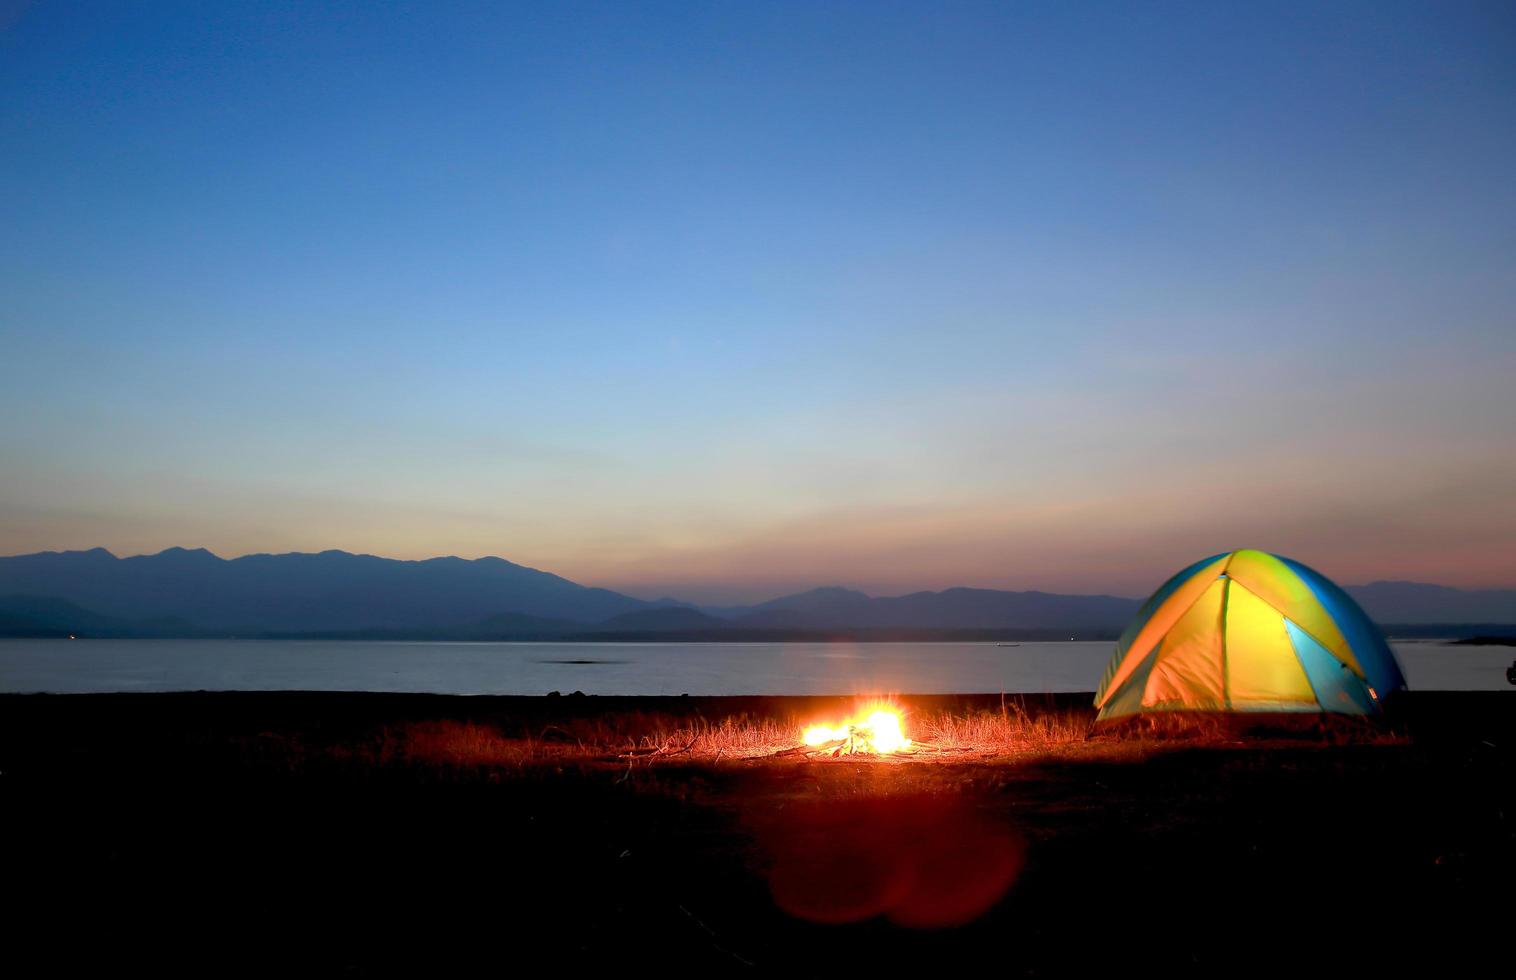 tenda e fogueira ao pôr do sol, ao lado do lago foto